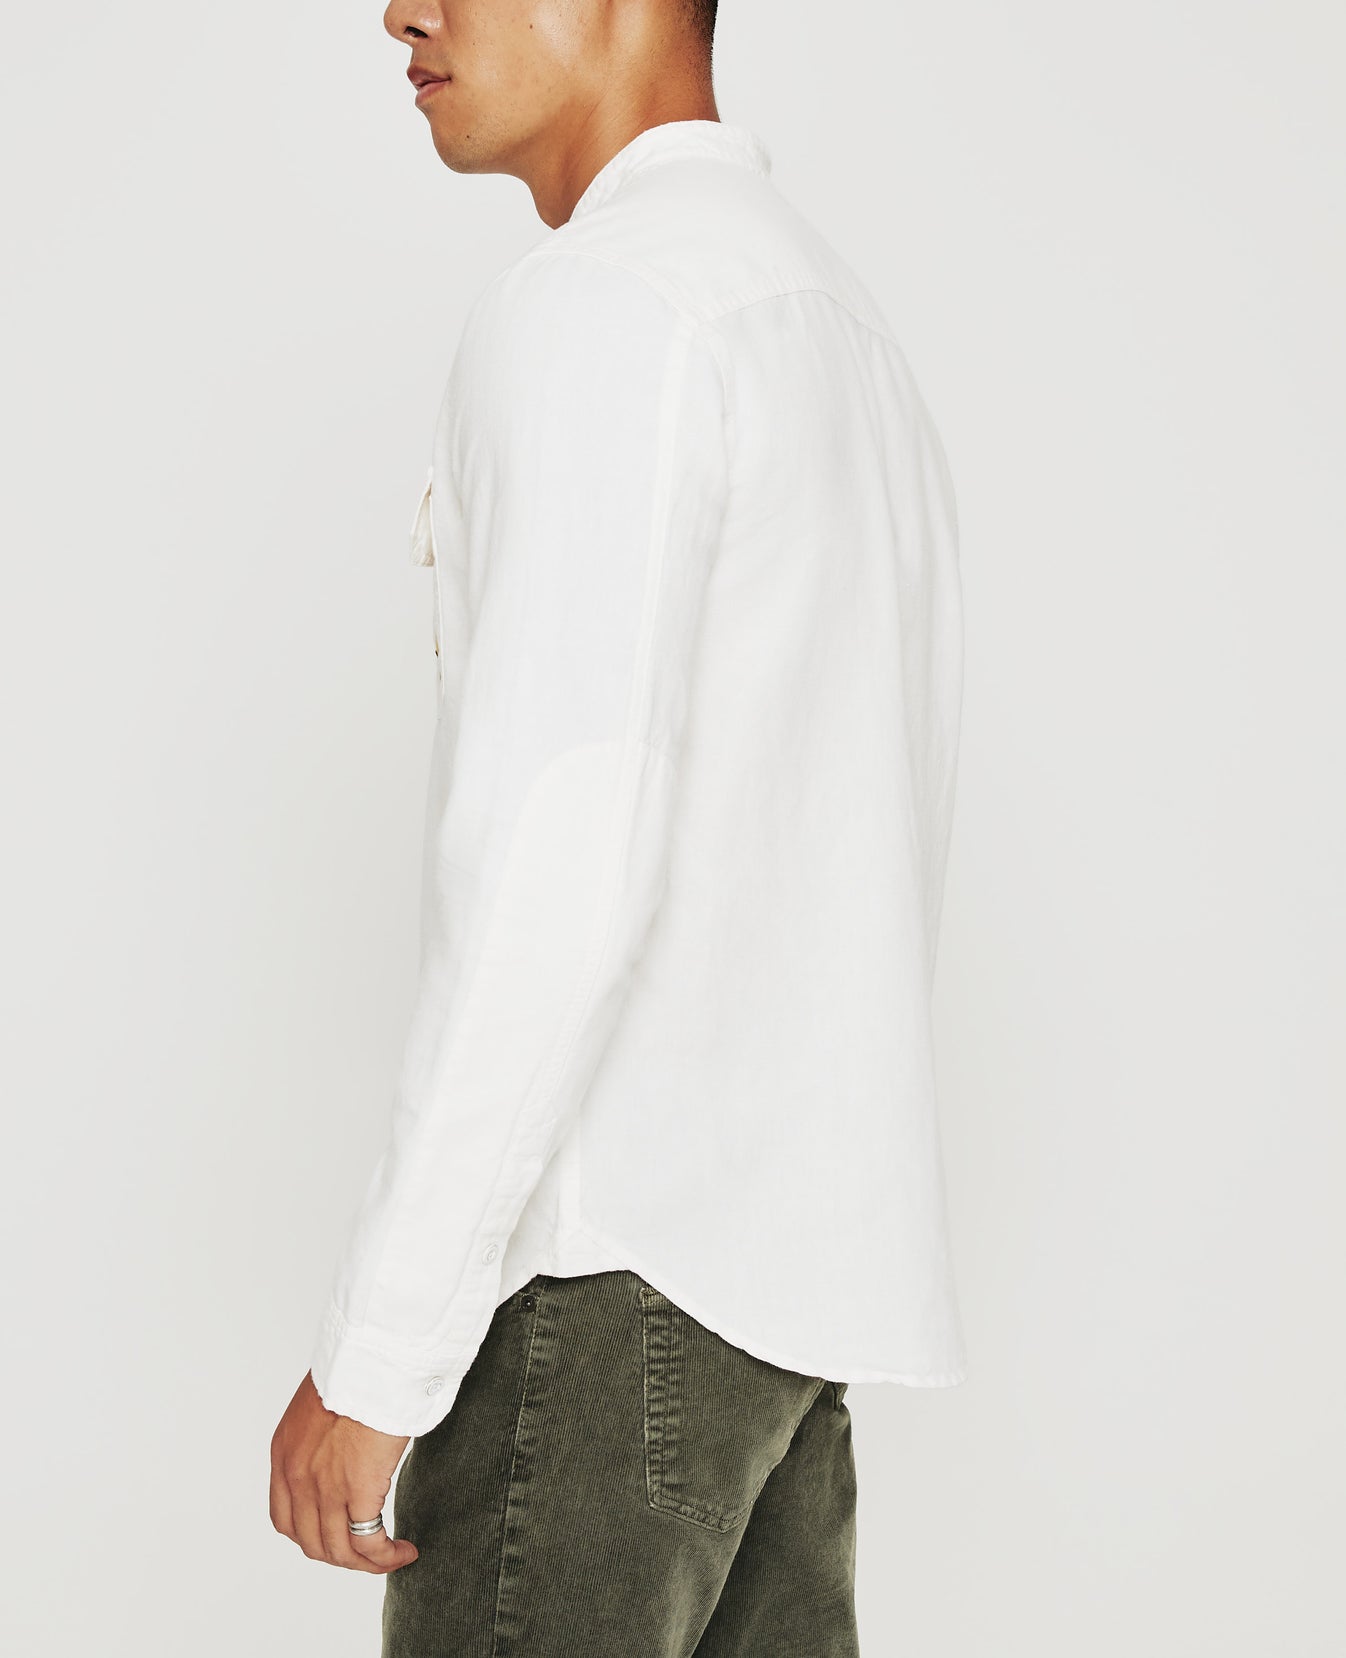 Benning Sleeve Patch Shirt Eb Super Bloom White Linen Mens Top Photo 4